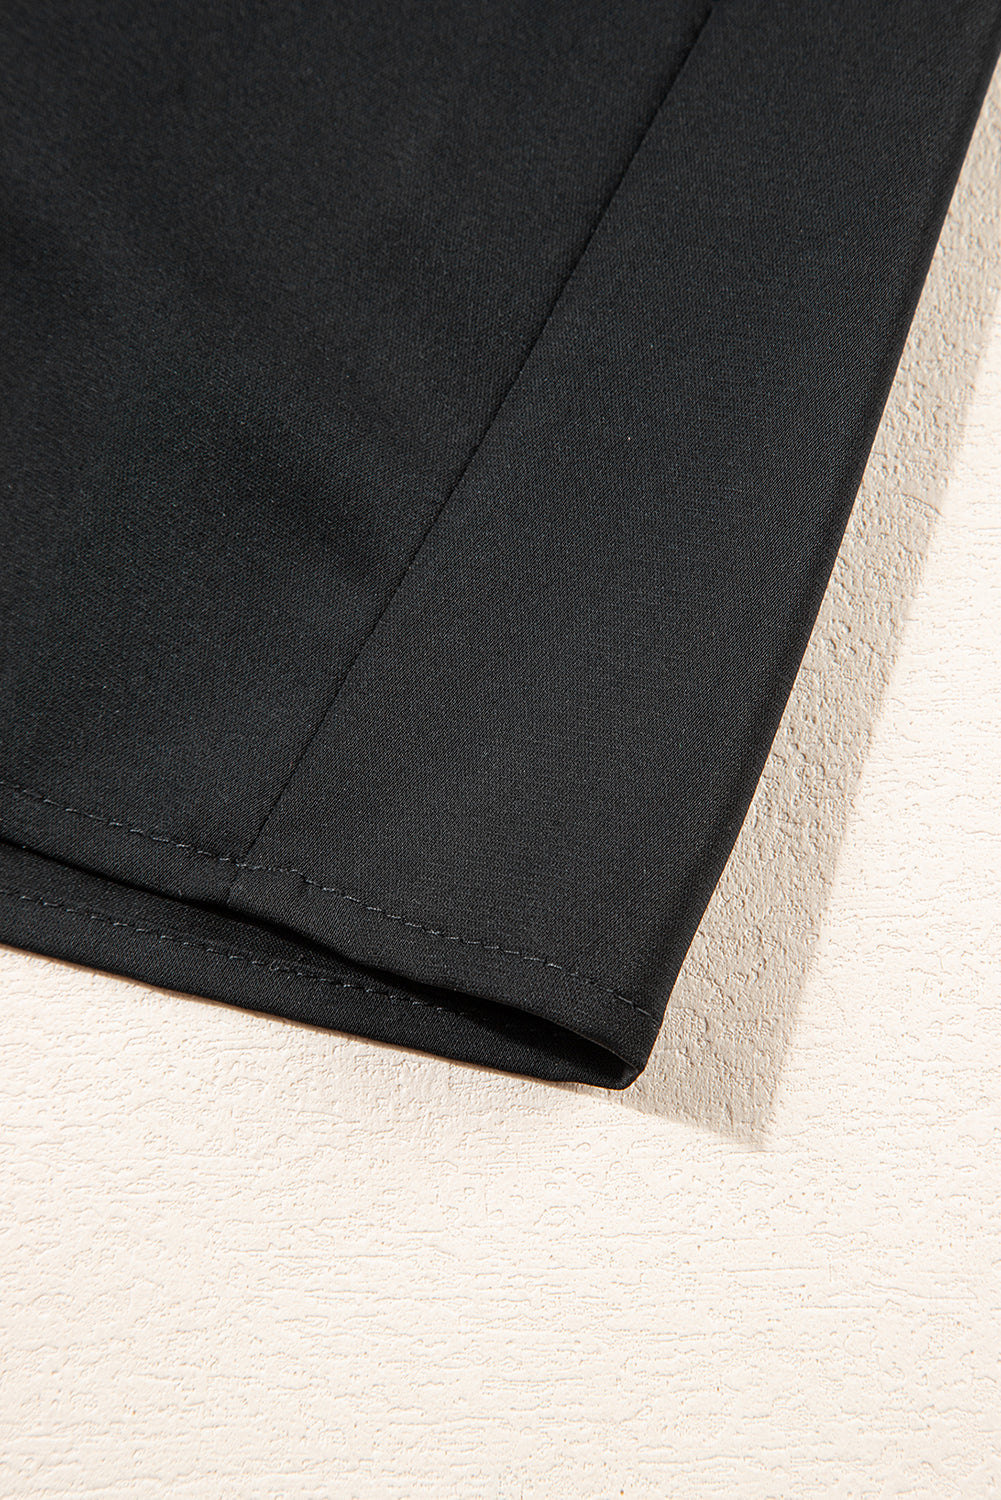 Black Plus Size Tie Cuffs V Neck Shirt Dress